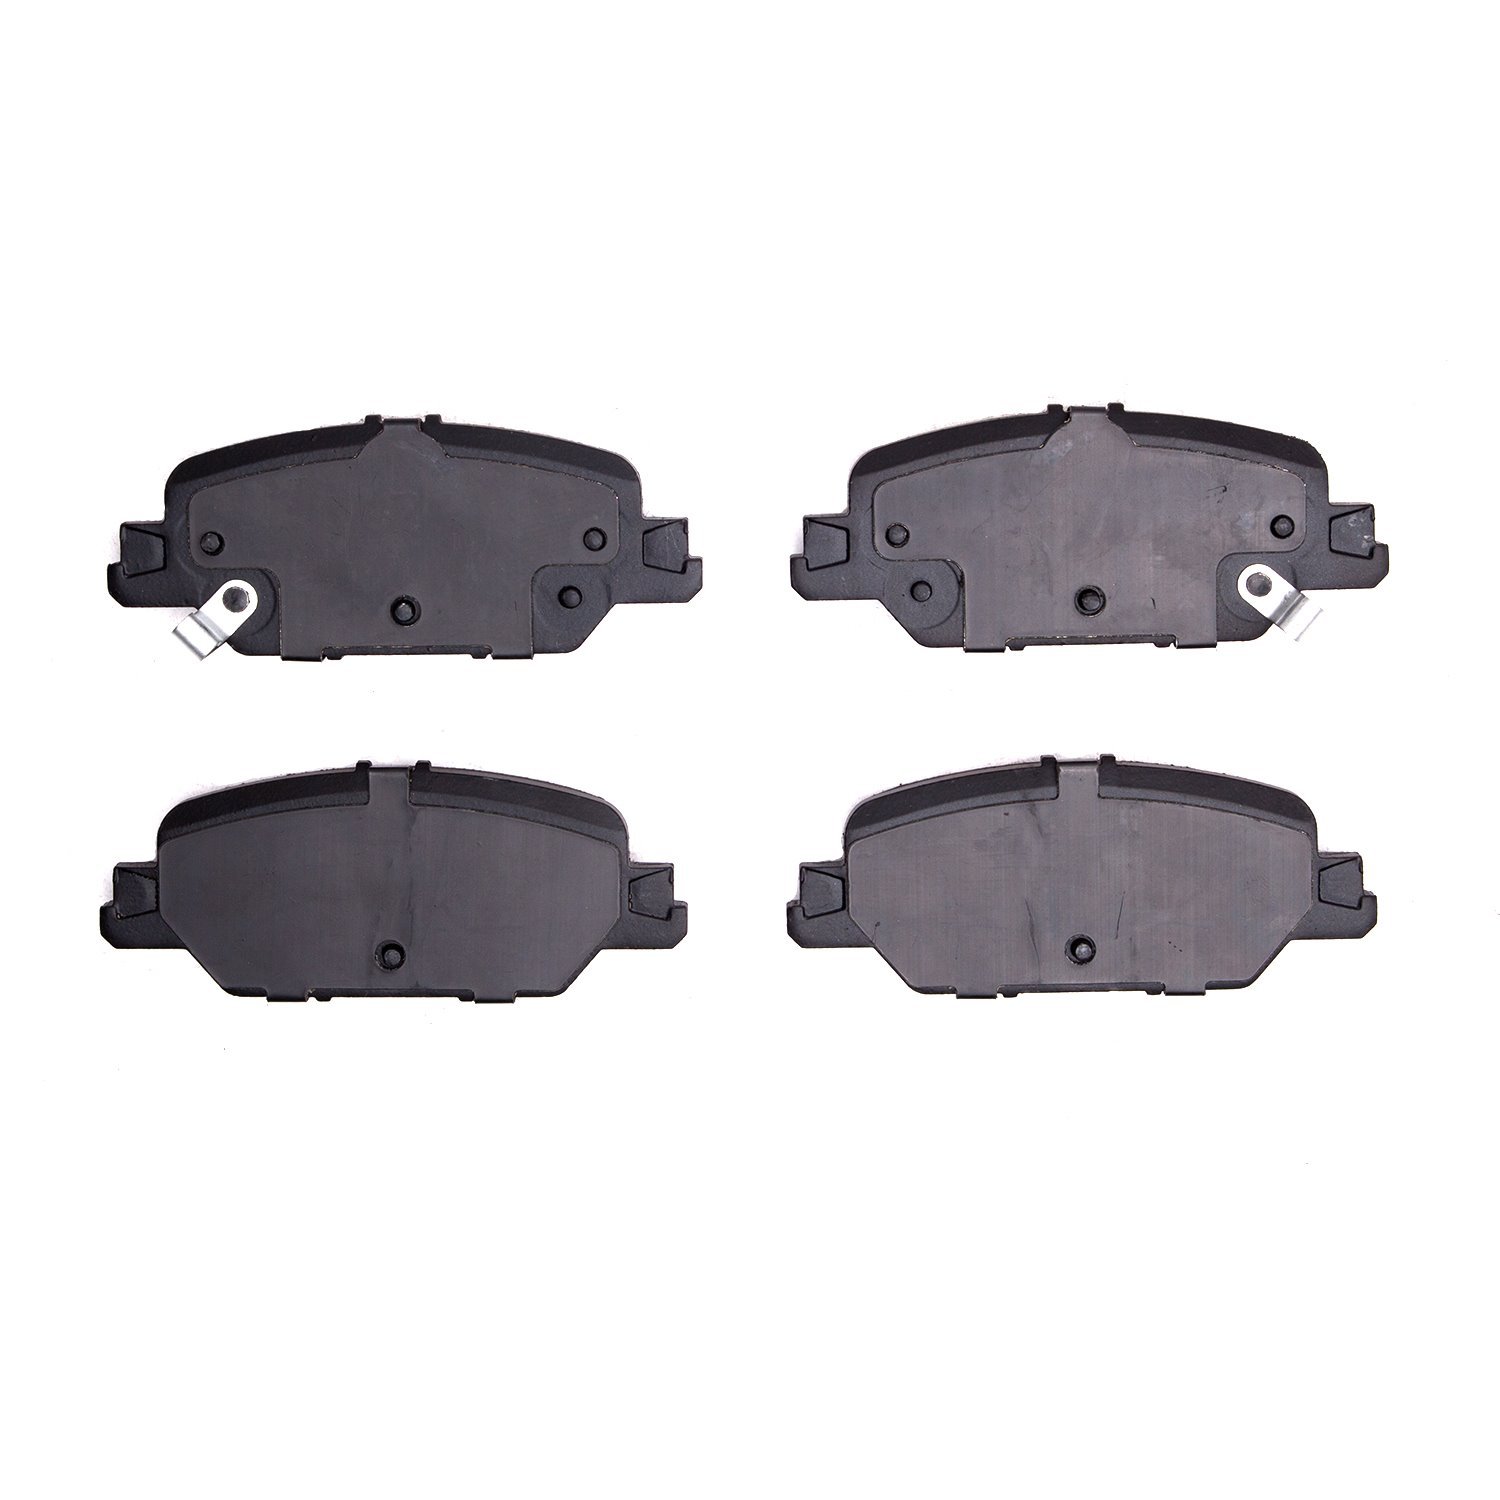 1551-2037-00 5000 Advanced Ceramic Brake Pads, Fits Select Acura/Honda, Position: Rear